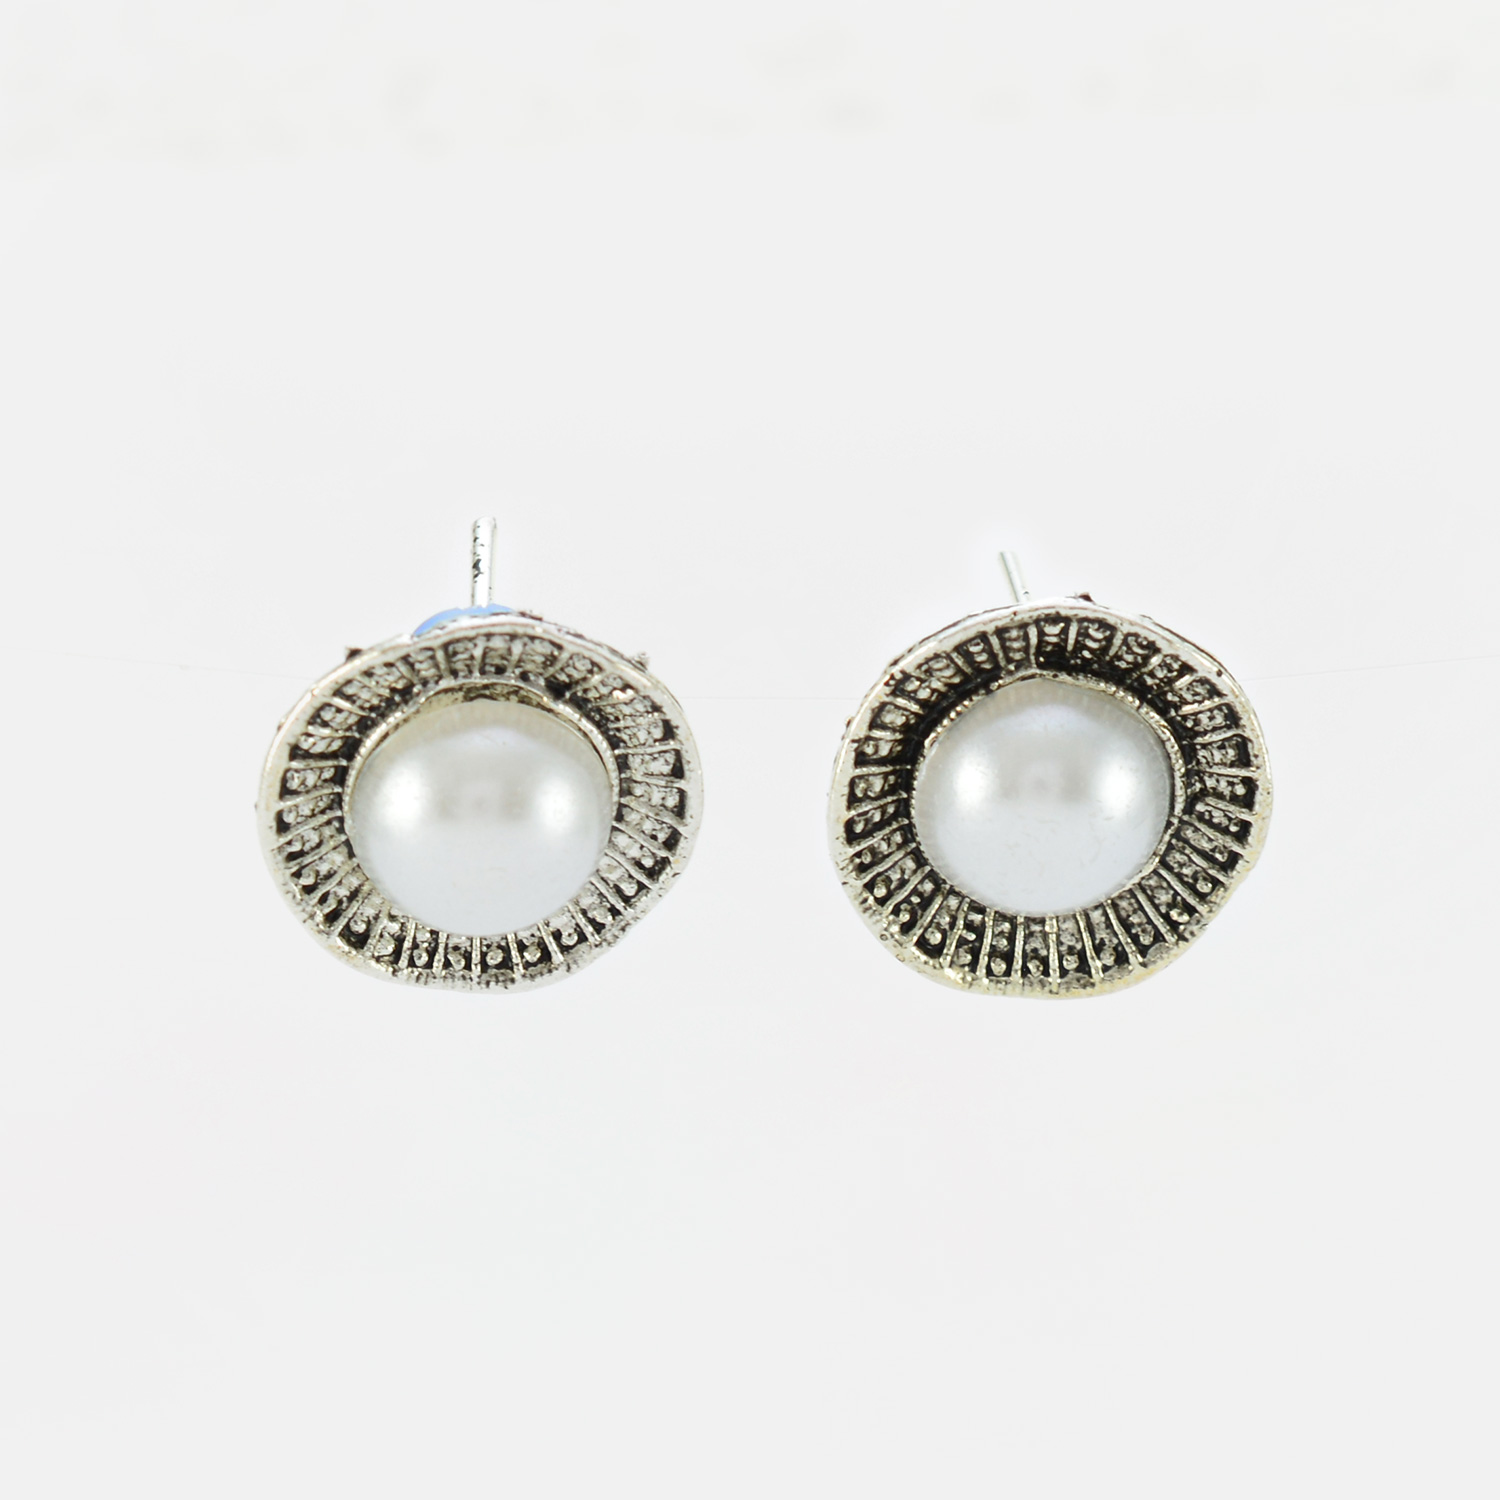 Wonderful Round Shape White Pearls Designer Earrings Set